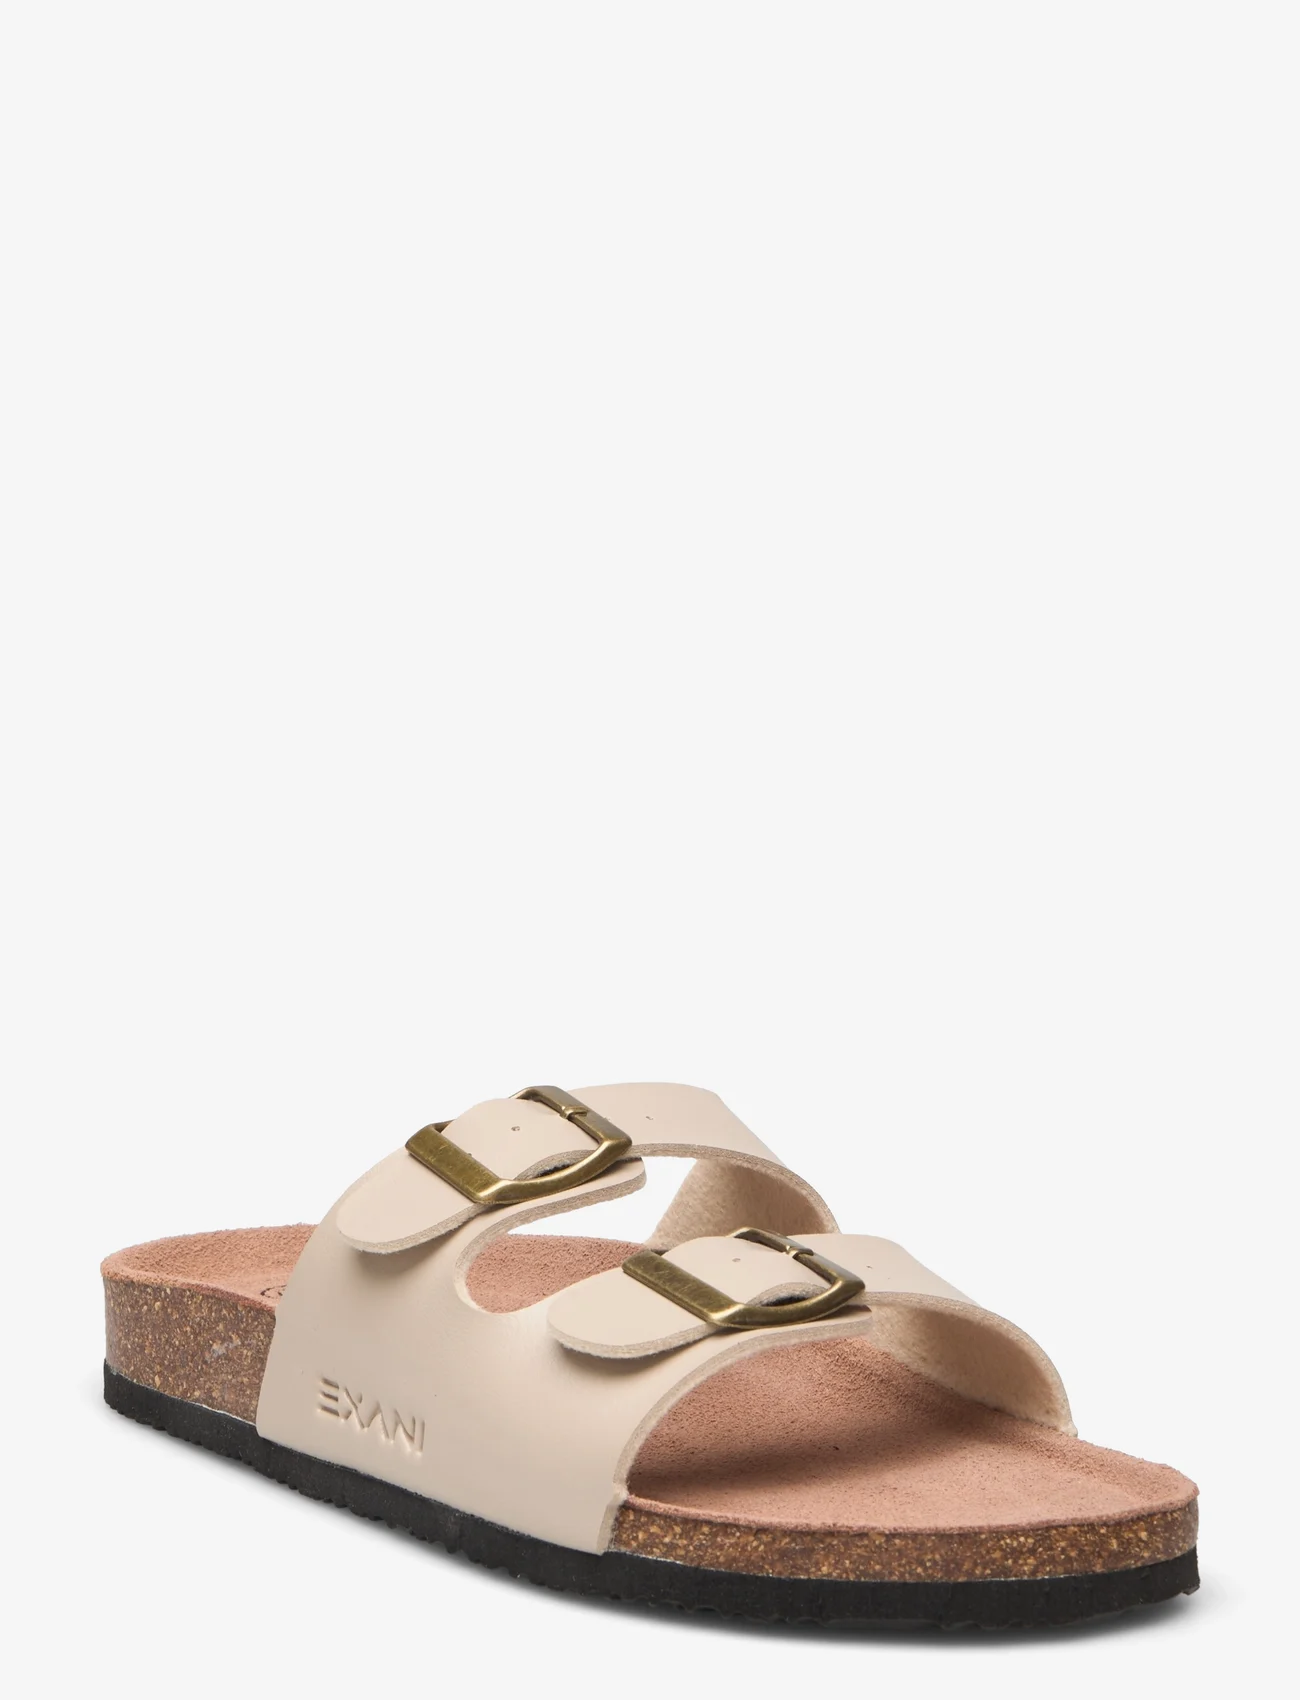 Exani - SPECTRA W - flat sandals - beige - 0